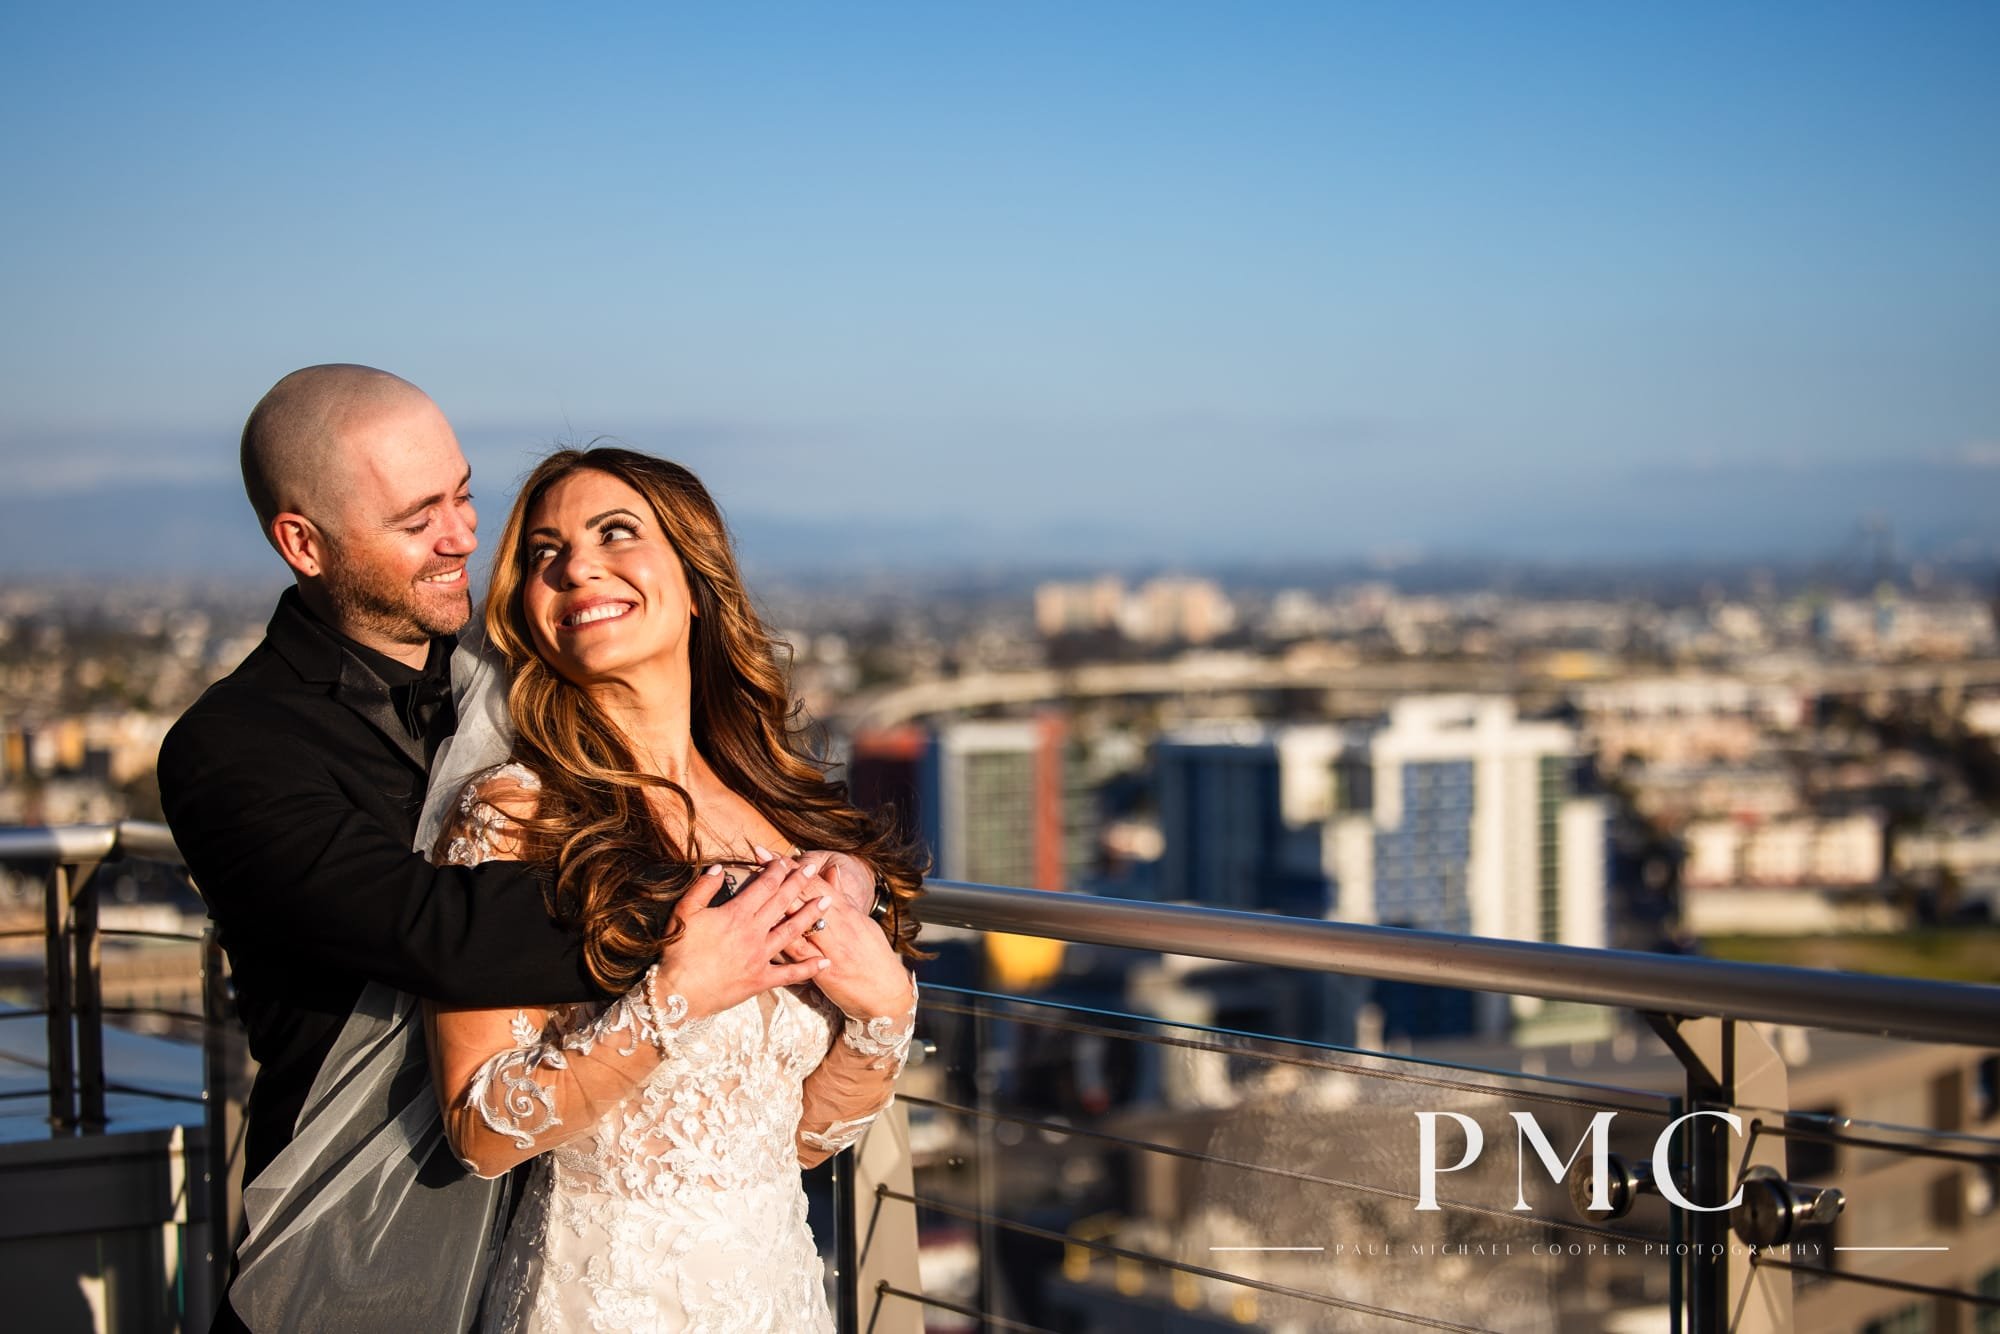 Danielle + Chris | A Stylish Downtown Spring Wedding in a High-Rise | San Diego, CA